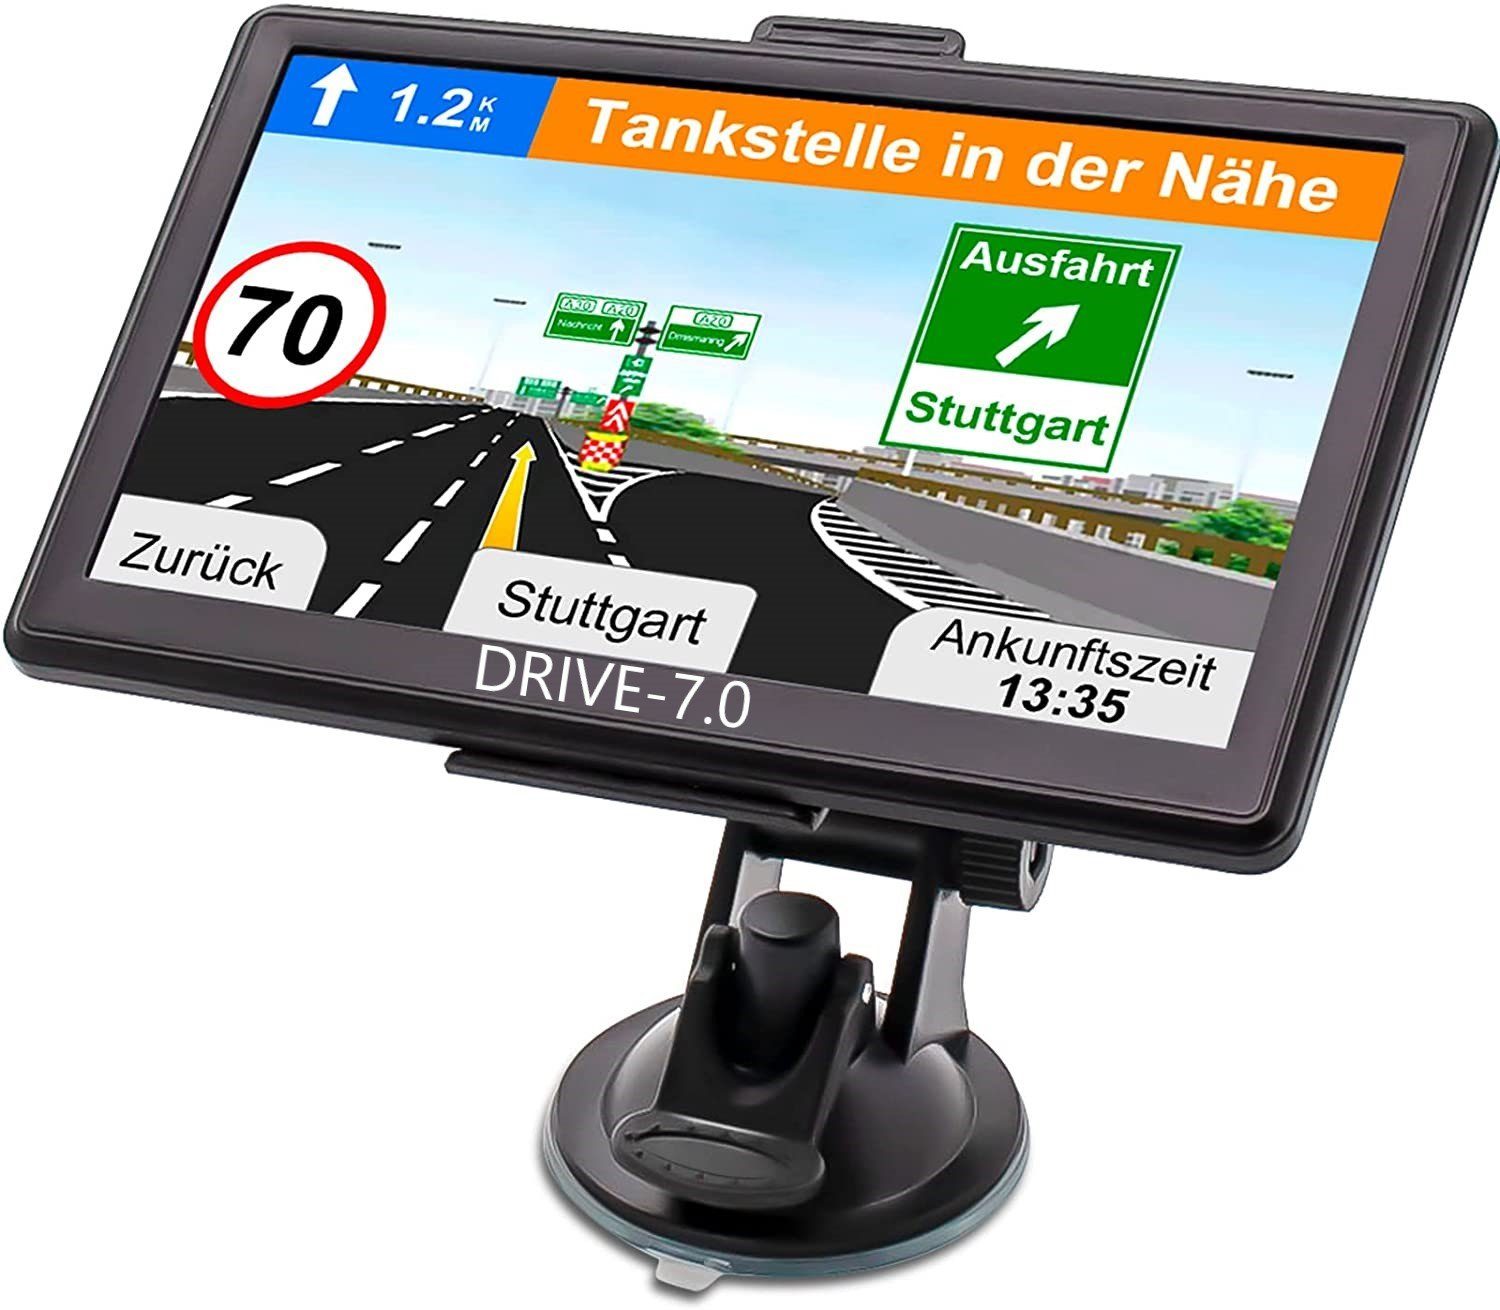 (Europa) WOHNMOBIL PKW, LKW, Drive-7.0 Zoll Navi für Navigationssysteme GPS GABITECH LKW-Navigationsgerät 7